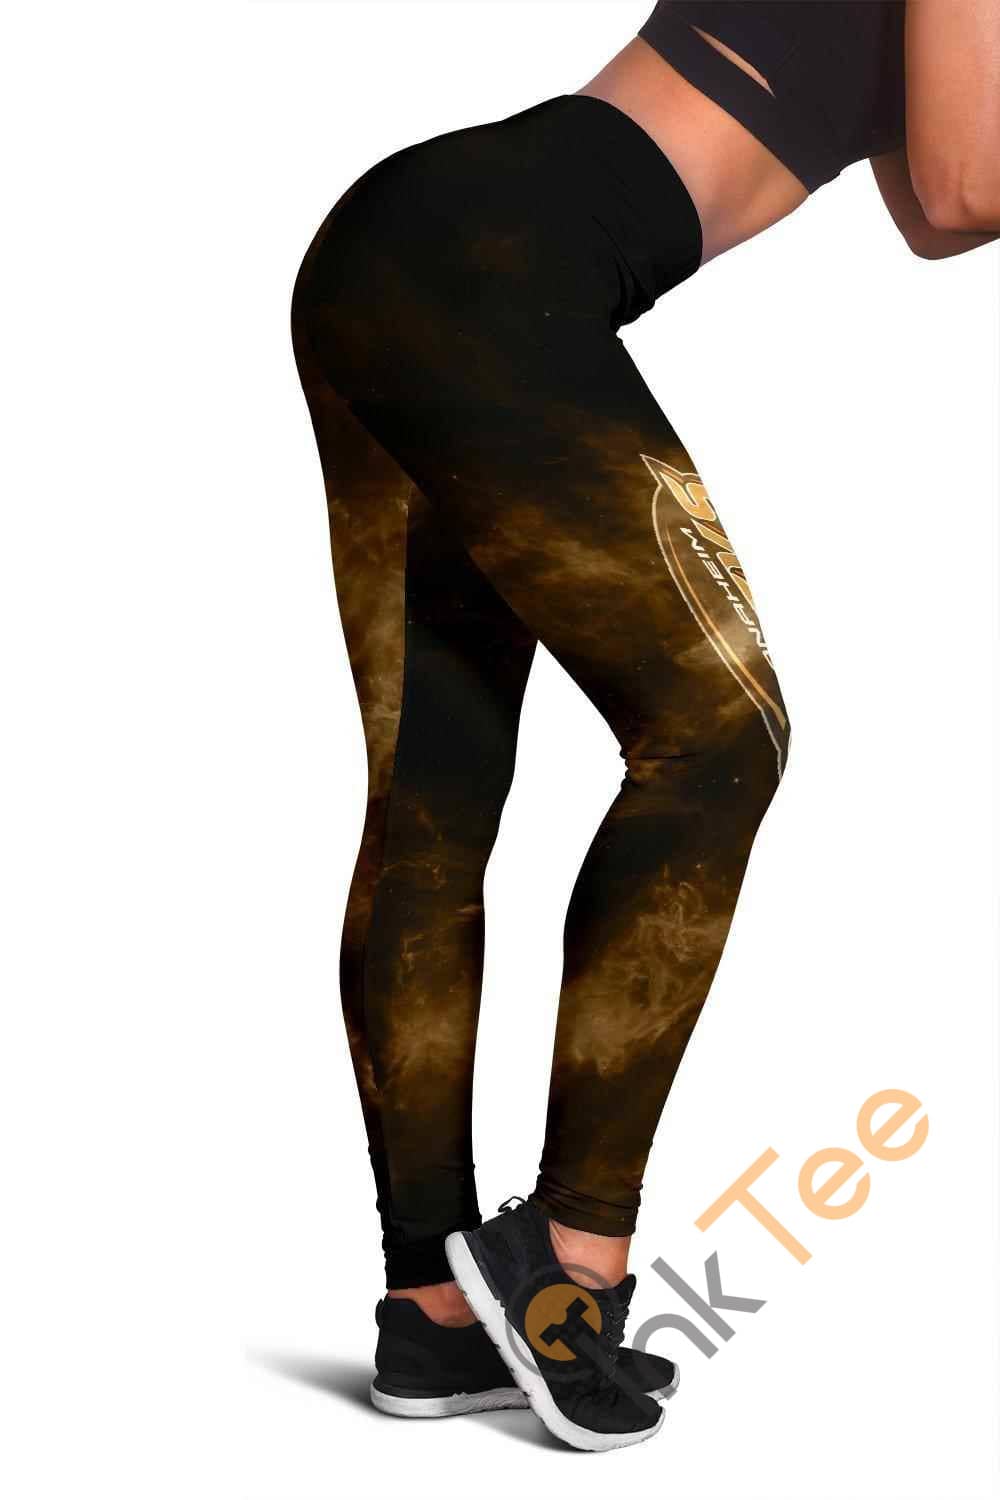 Inktee Store - Anaheim Ducks 3D All Over Print For Yoga Fitness Women'S Leggings Image